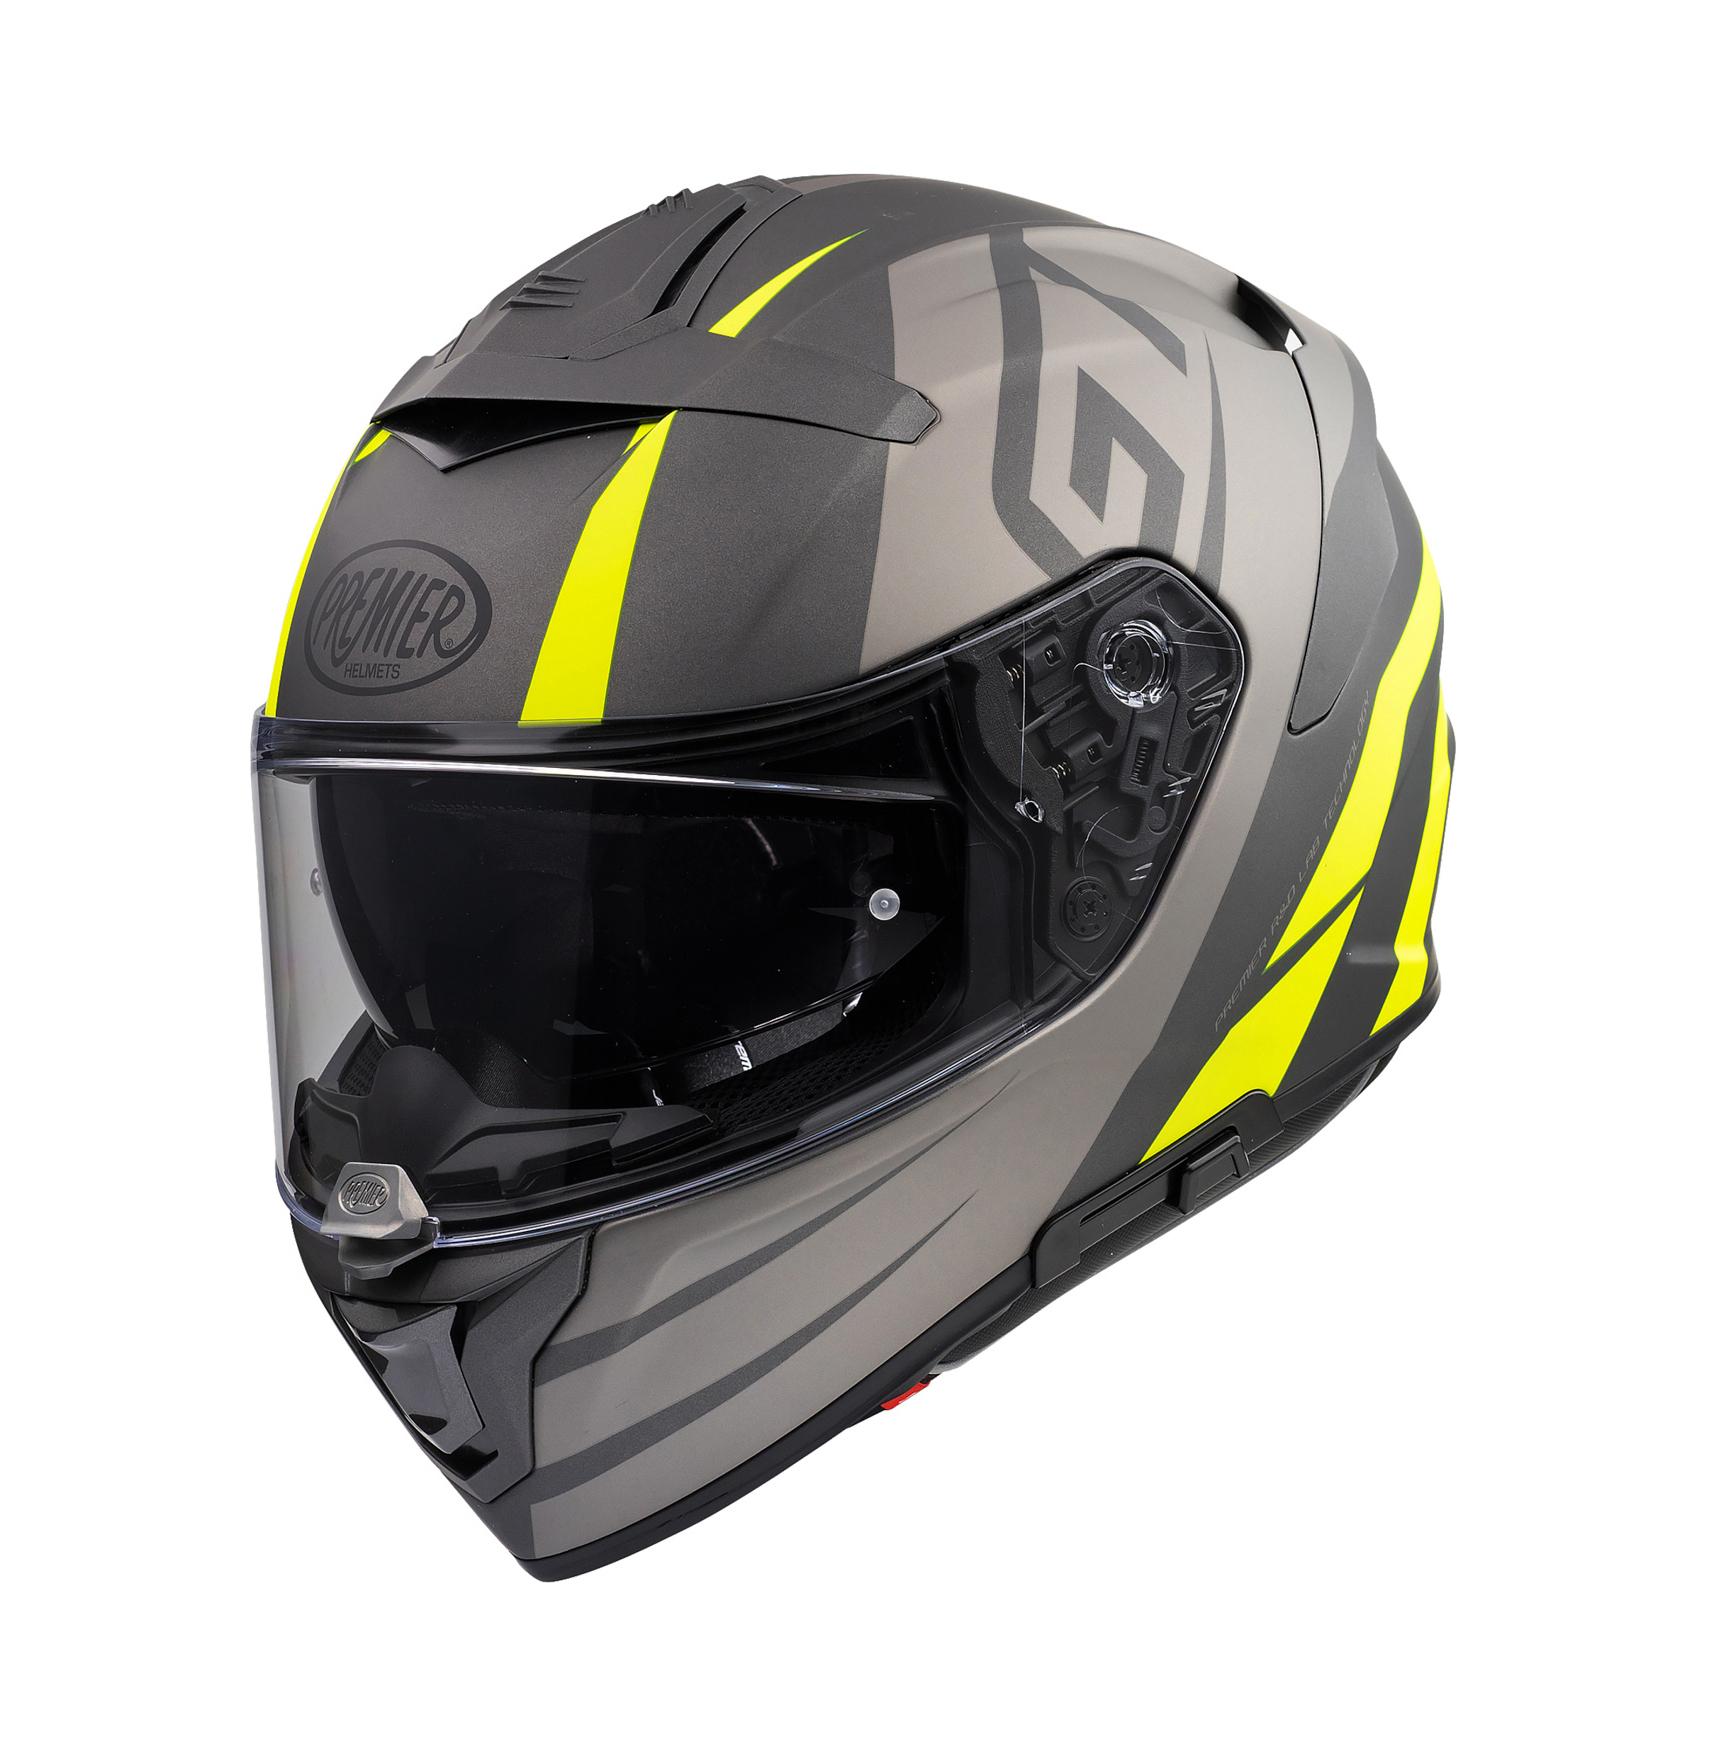 Premier Devil Gt Full Face Motorcycle Helmet - Black/Neon, S